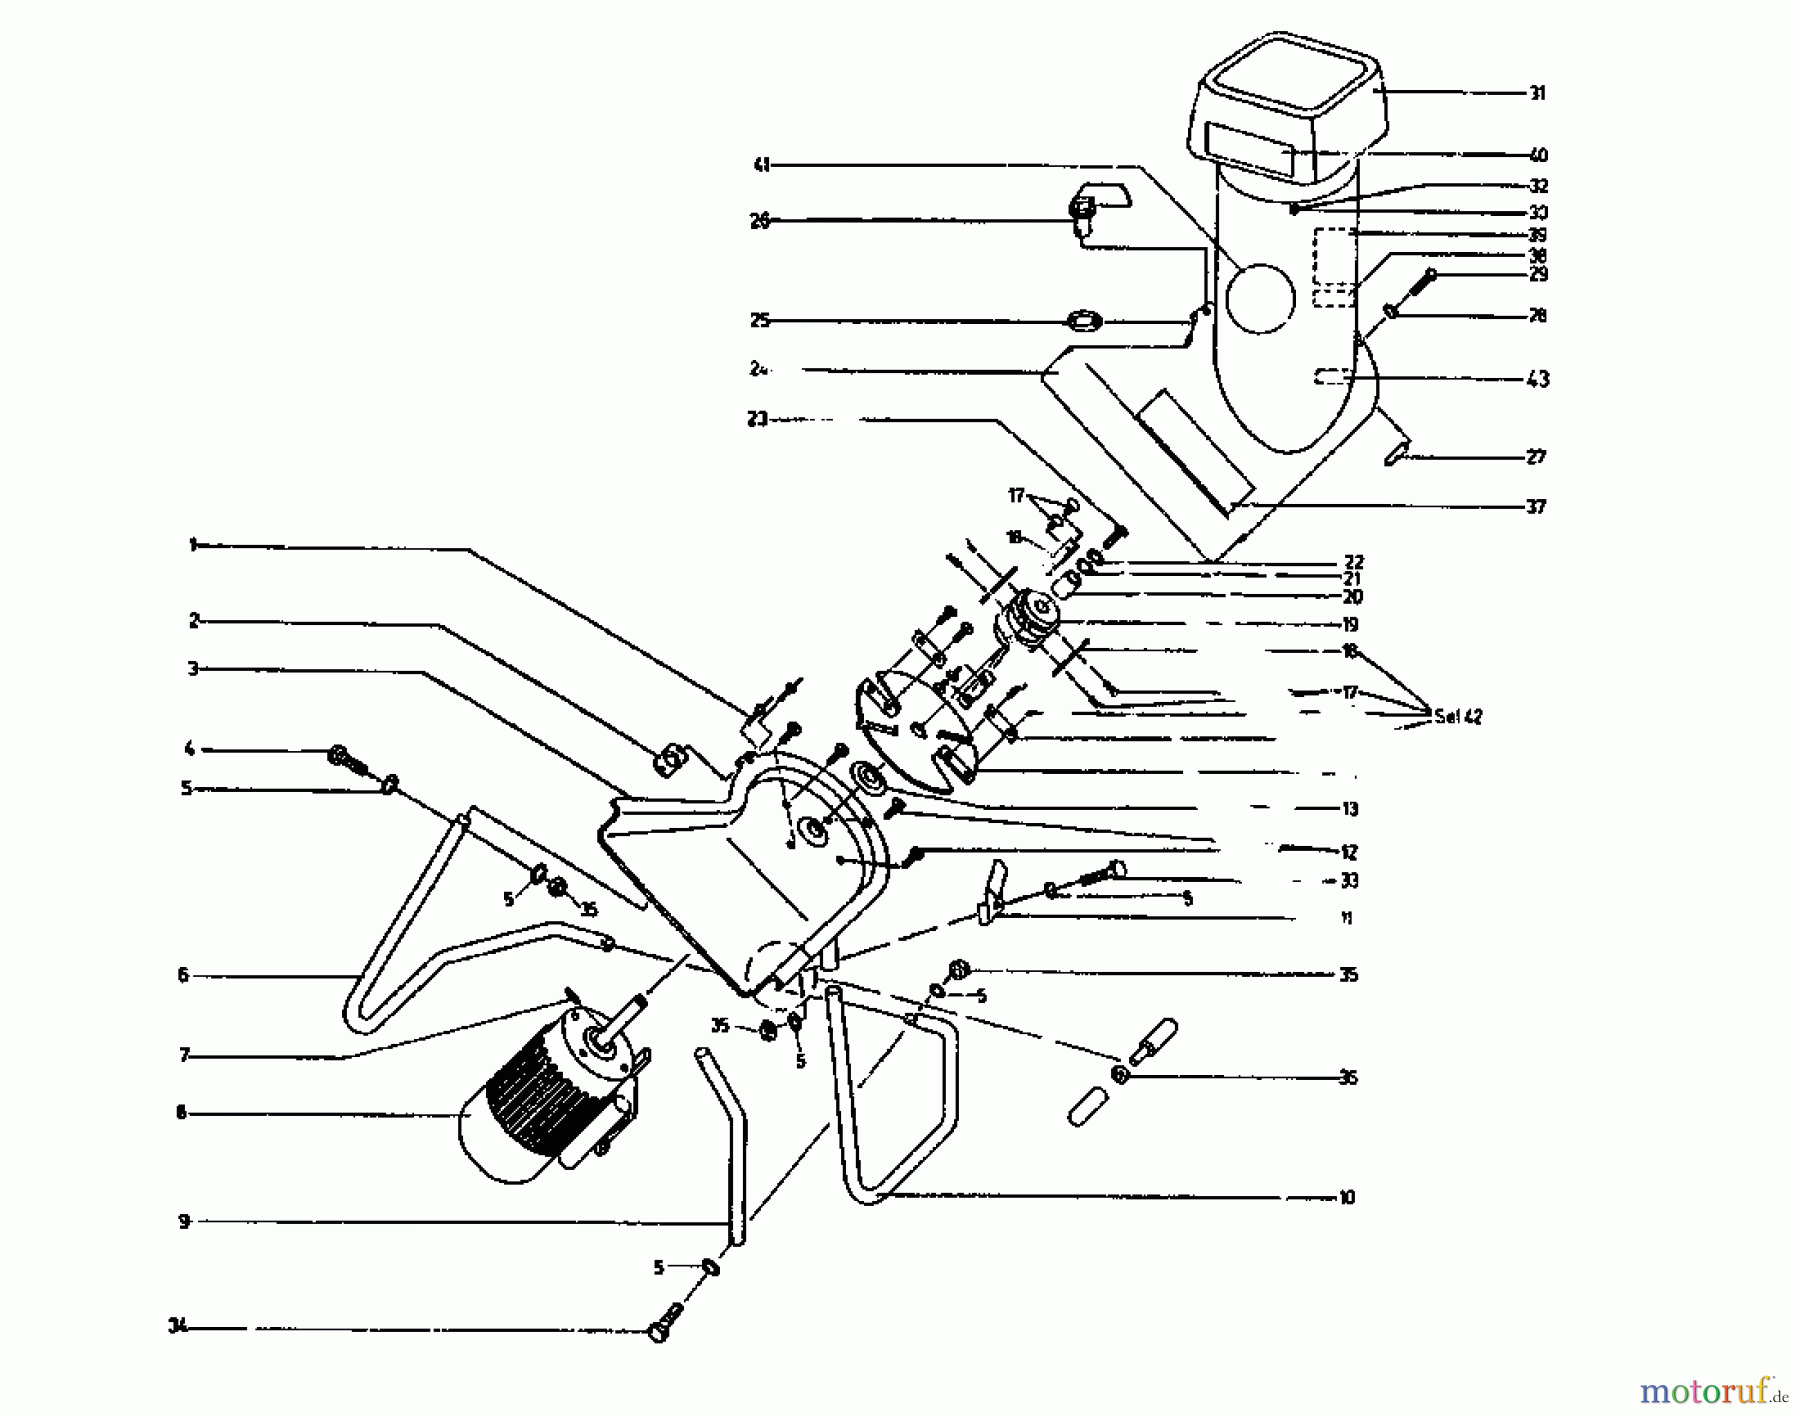  Gutbrod Chipper GAE 13 04002.03  (1993) Basic machine